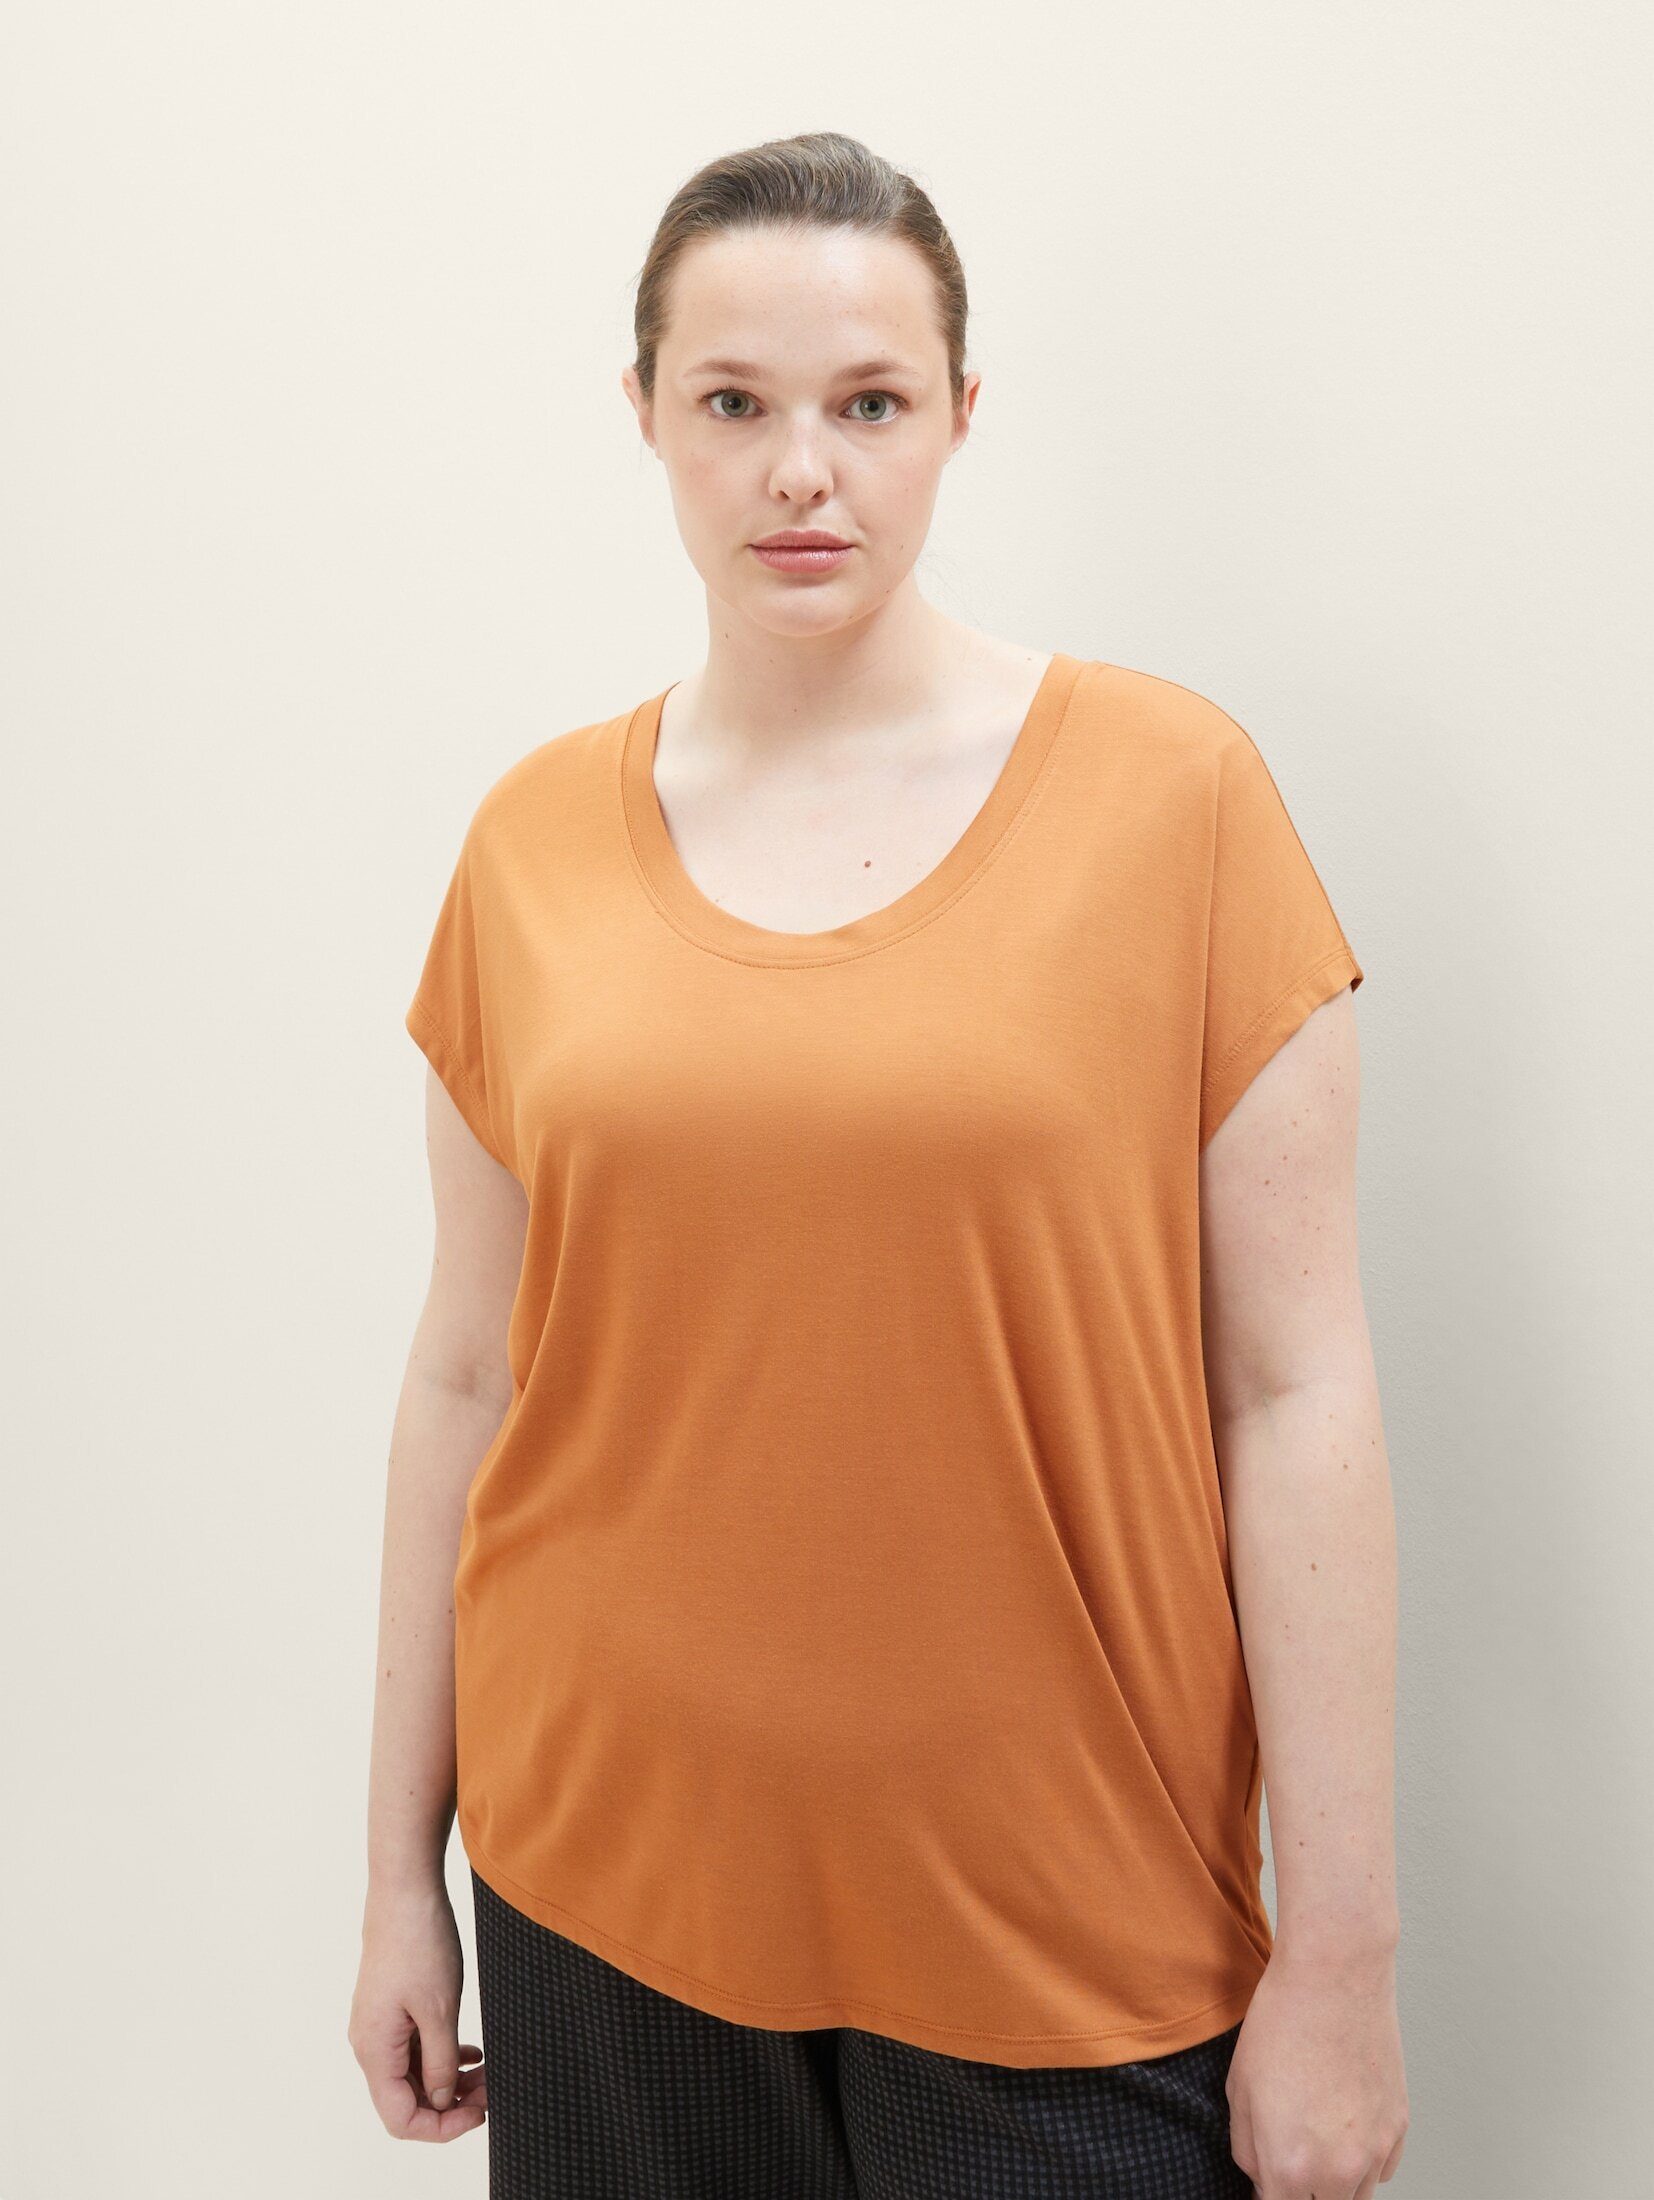 TOM TAILOR PLUS T-Shirt Plus ist - Loose trägt Model Unser und 46 Größe T-Shirt, Fit 180 groß cm